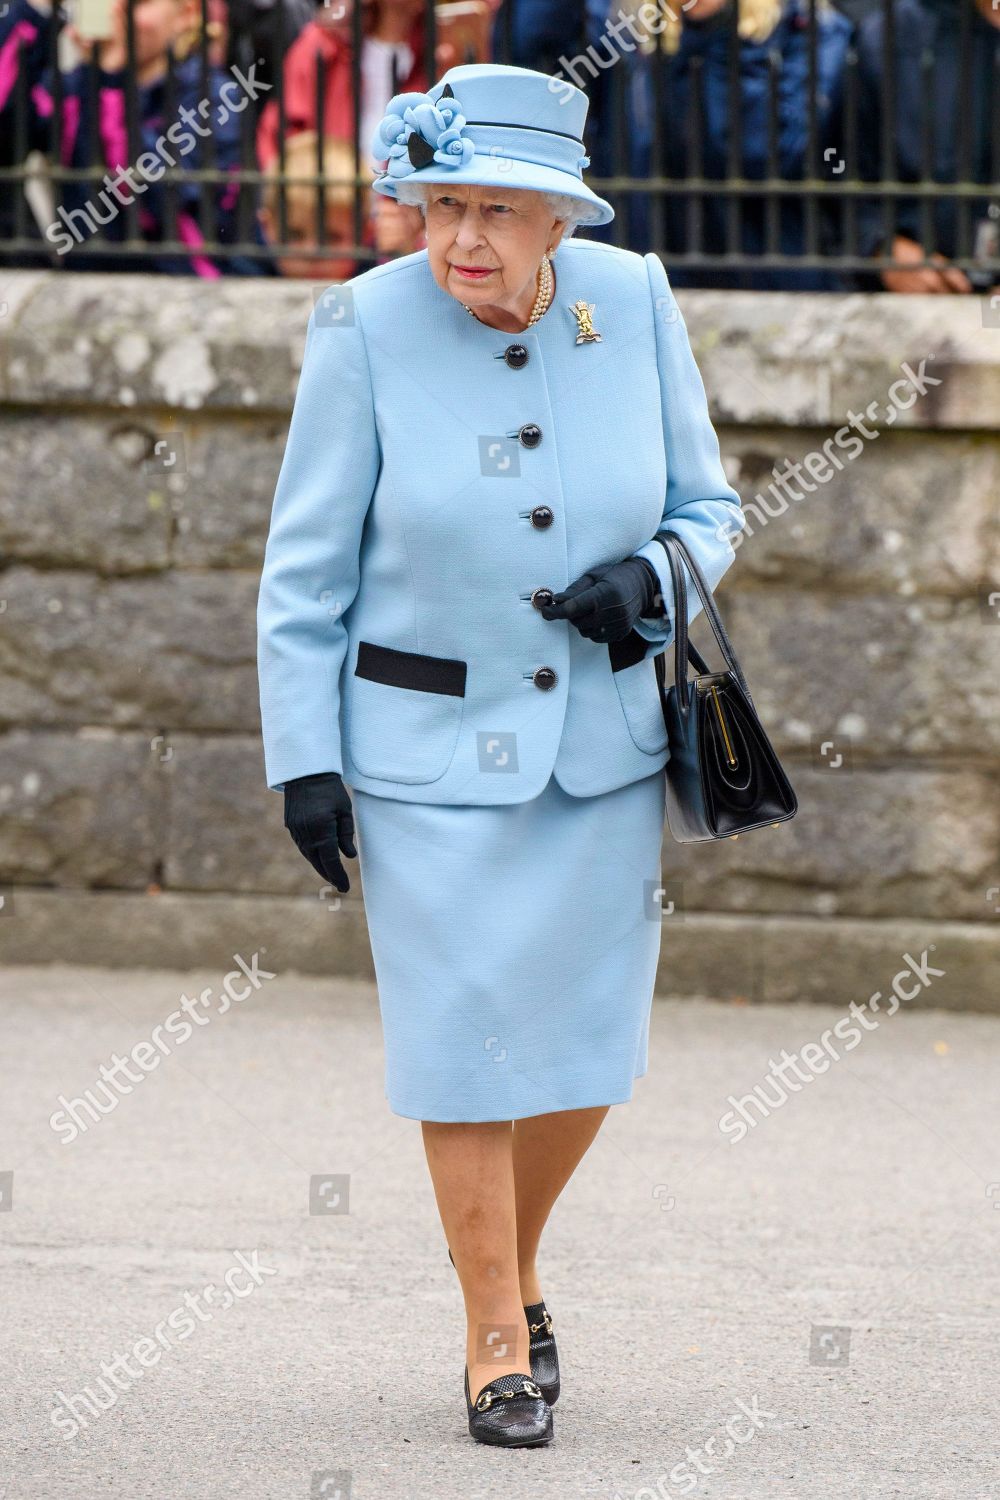 queen-elizabeth-ii-official-arrival-at-balmoral-scotland-uk-shutterstock-editorial-10355112bd.jpg